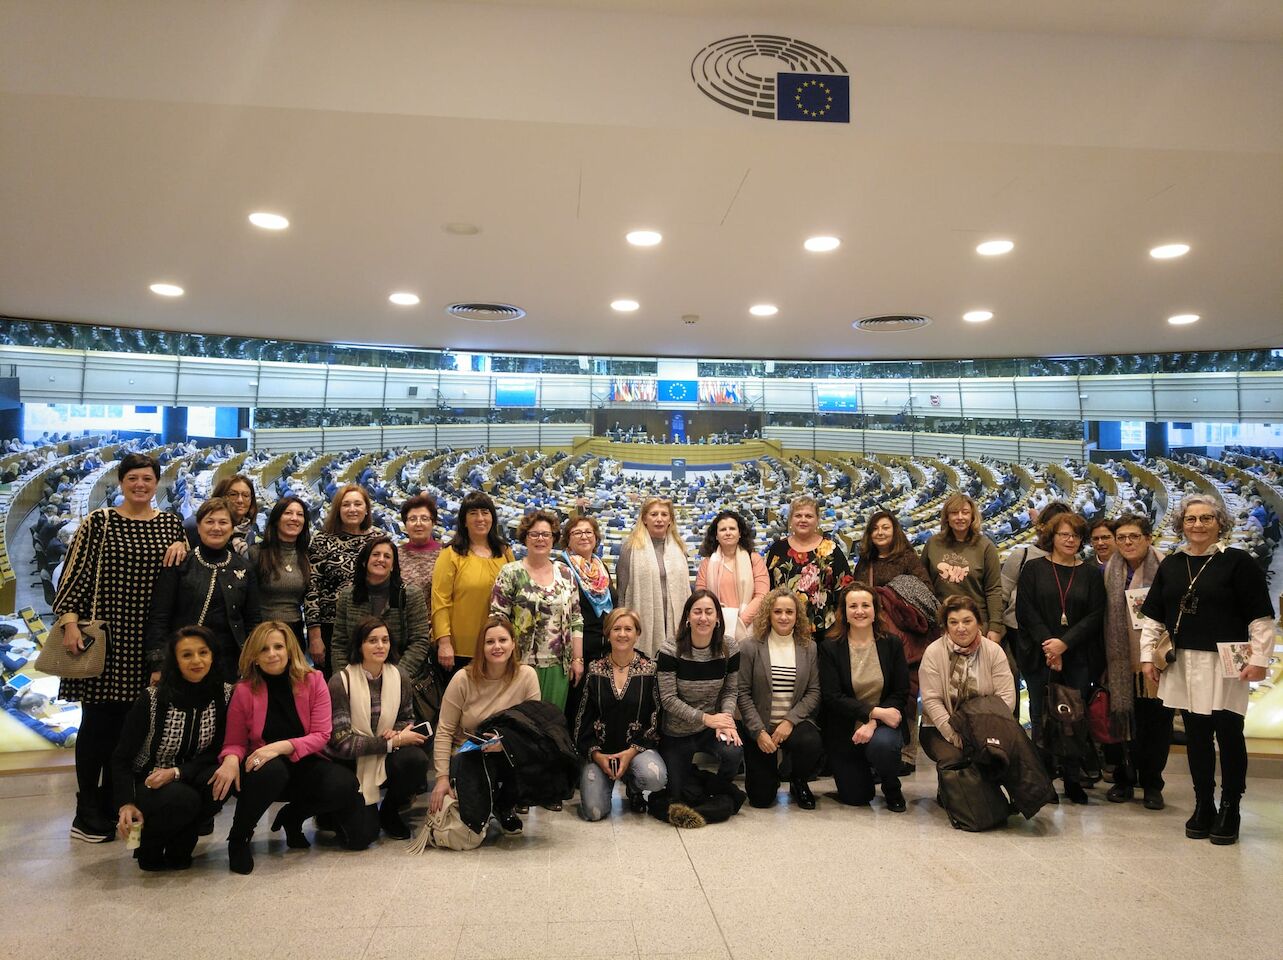 Euroencuentro Mujer Rural Bruselas